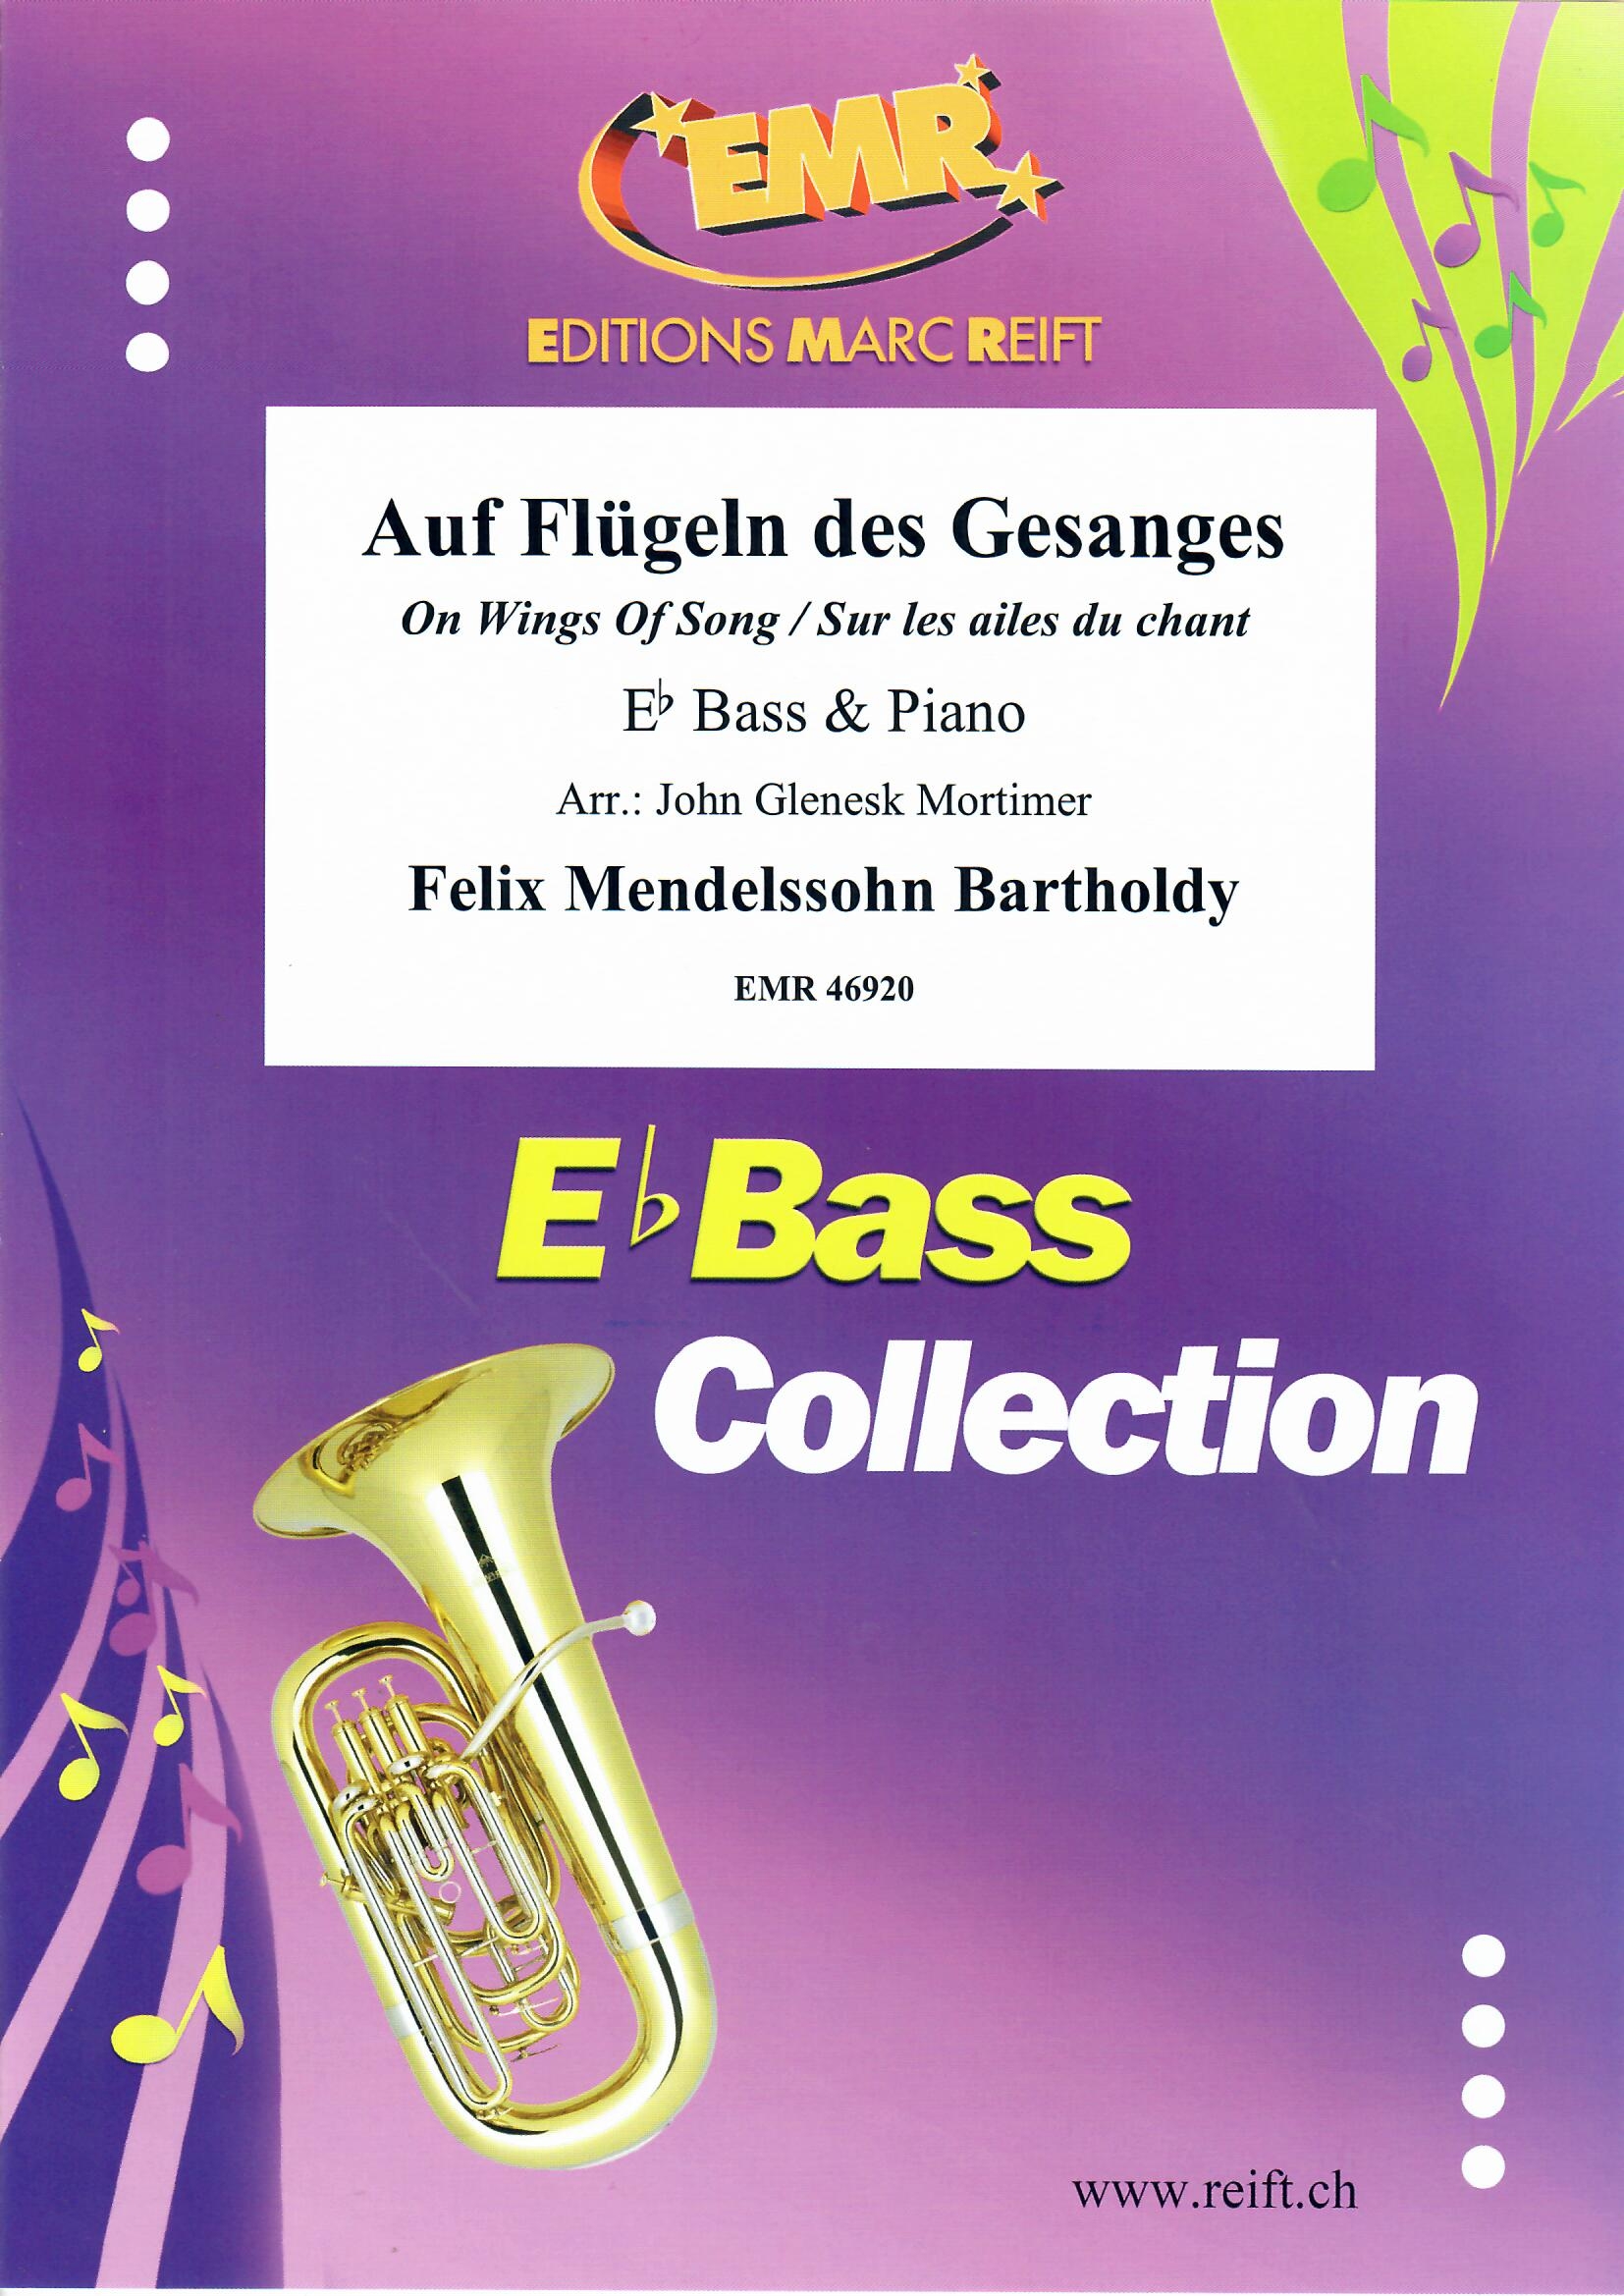 AUF FLüGELN DES GESANGES - Eb.Bass & Piano, SOLOS - E♭. Bass